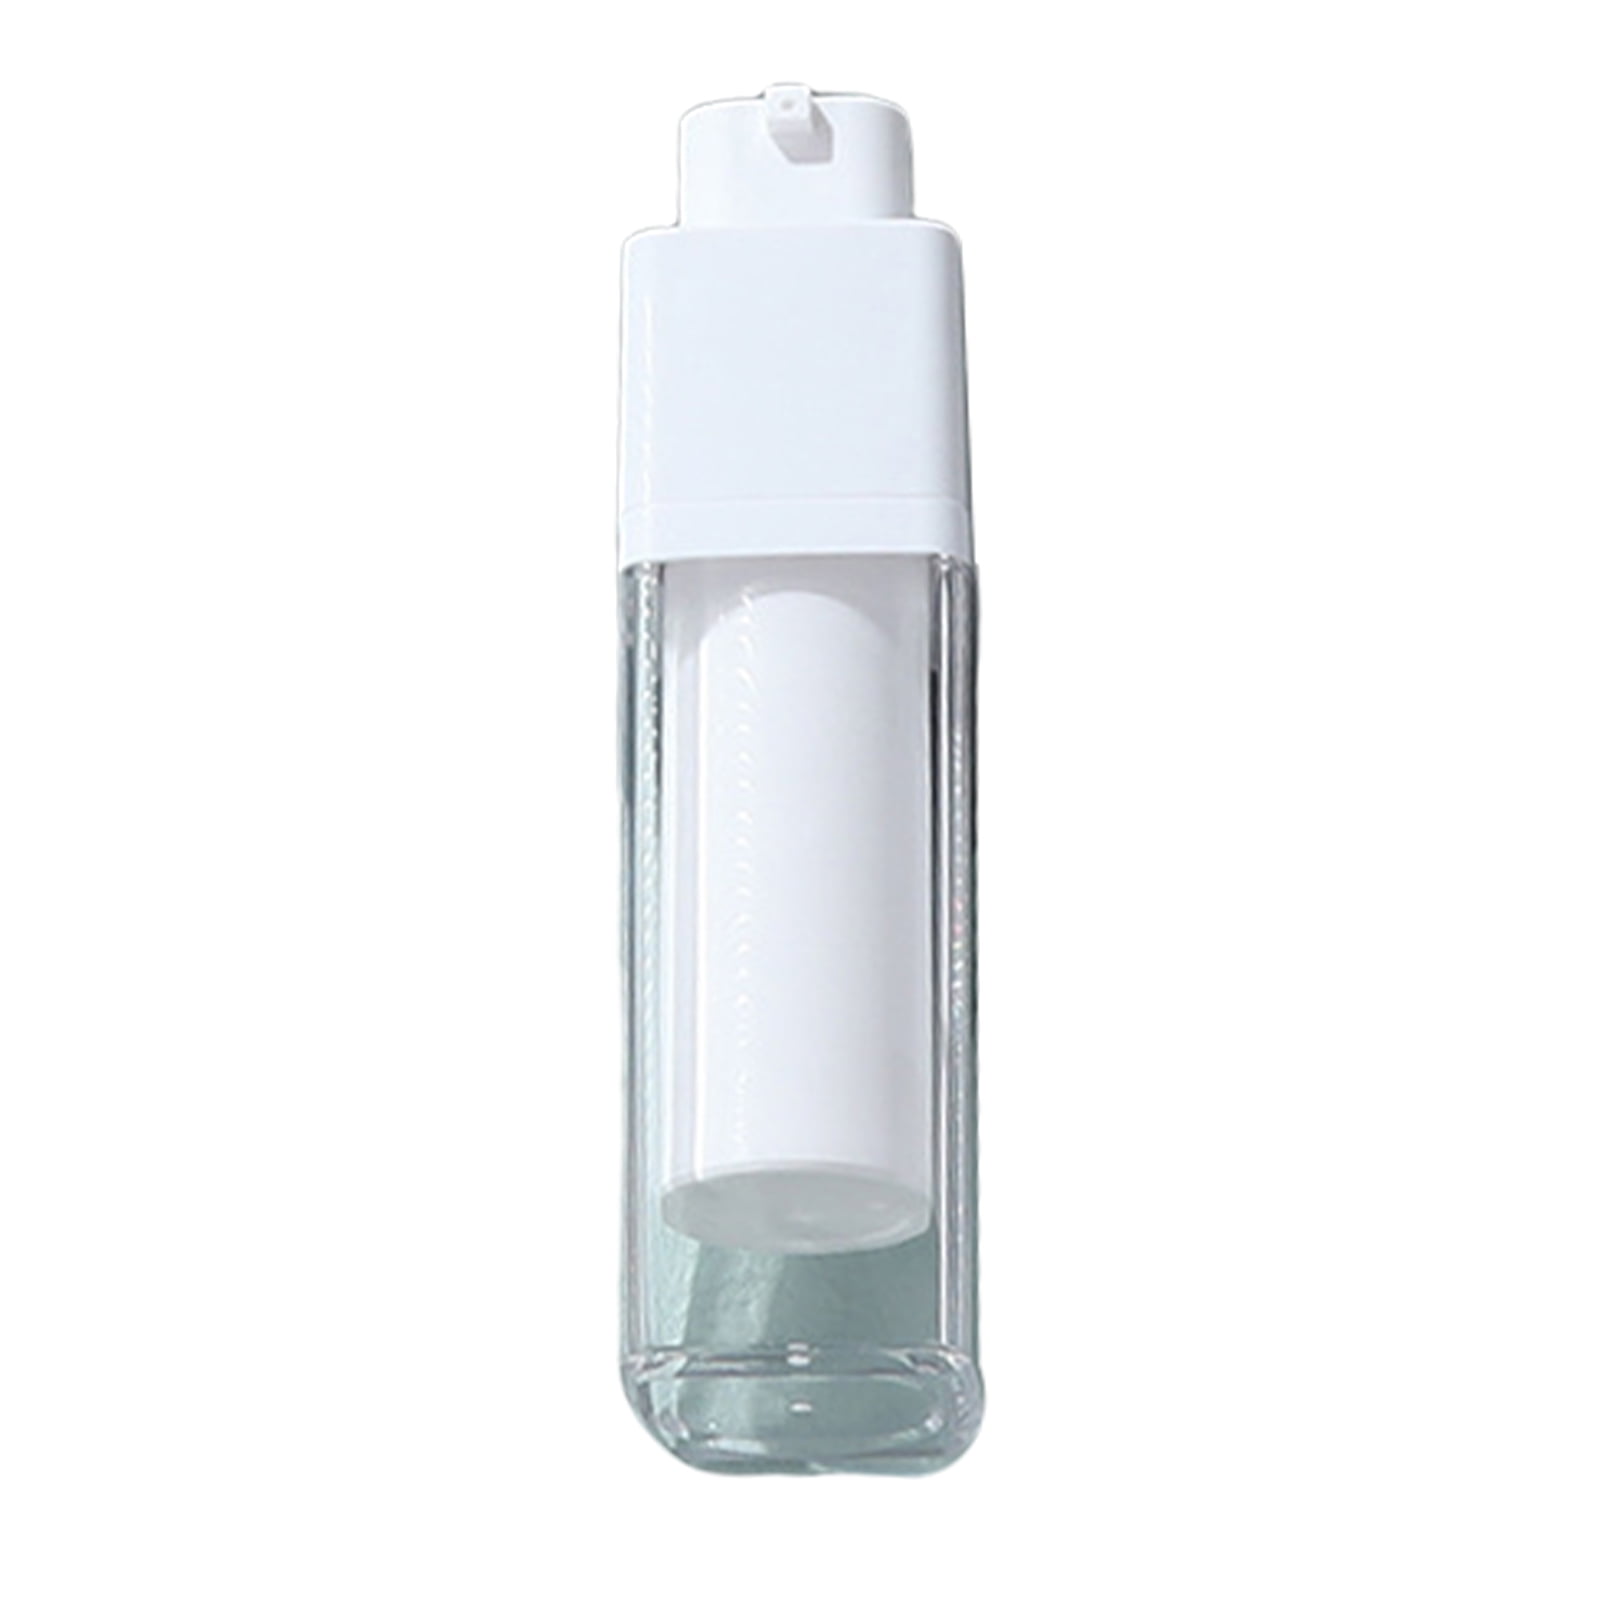 16oz Refillable Glass Bottles – Saffi Saana